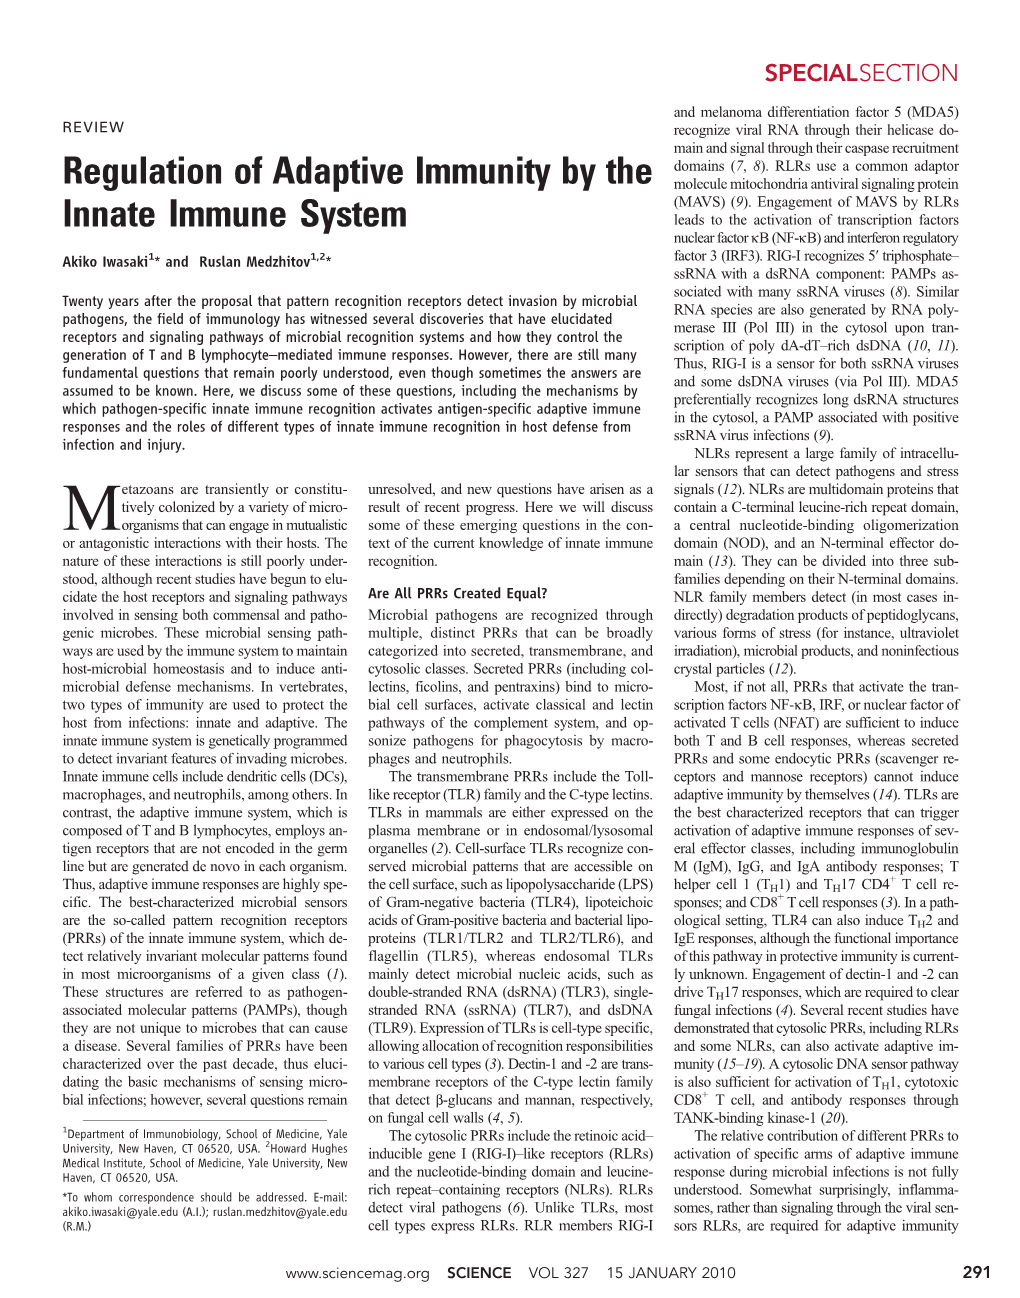 Regulation of Adaptive Immunity by the Innate Immune System